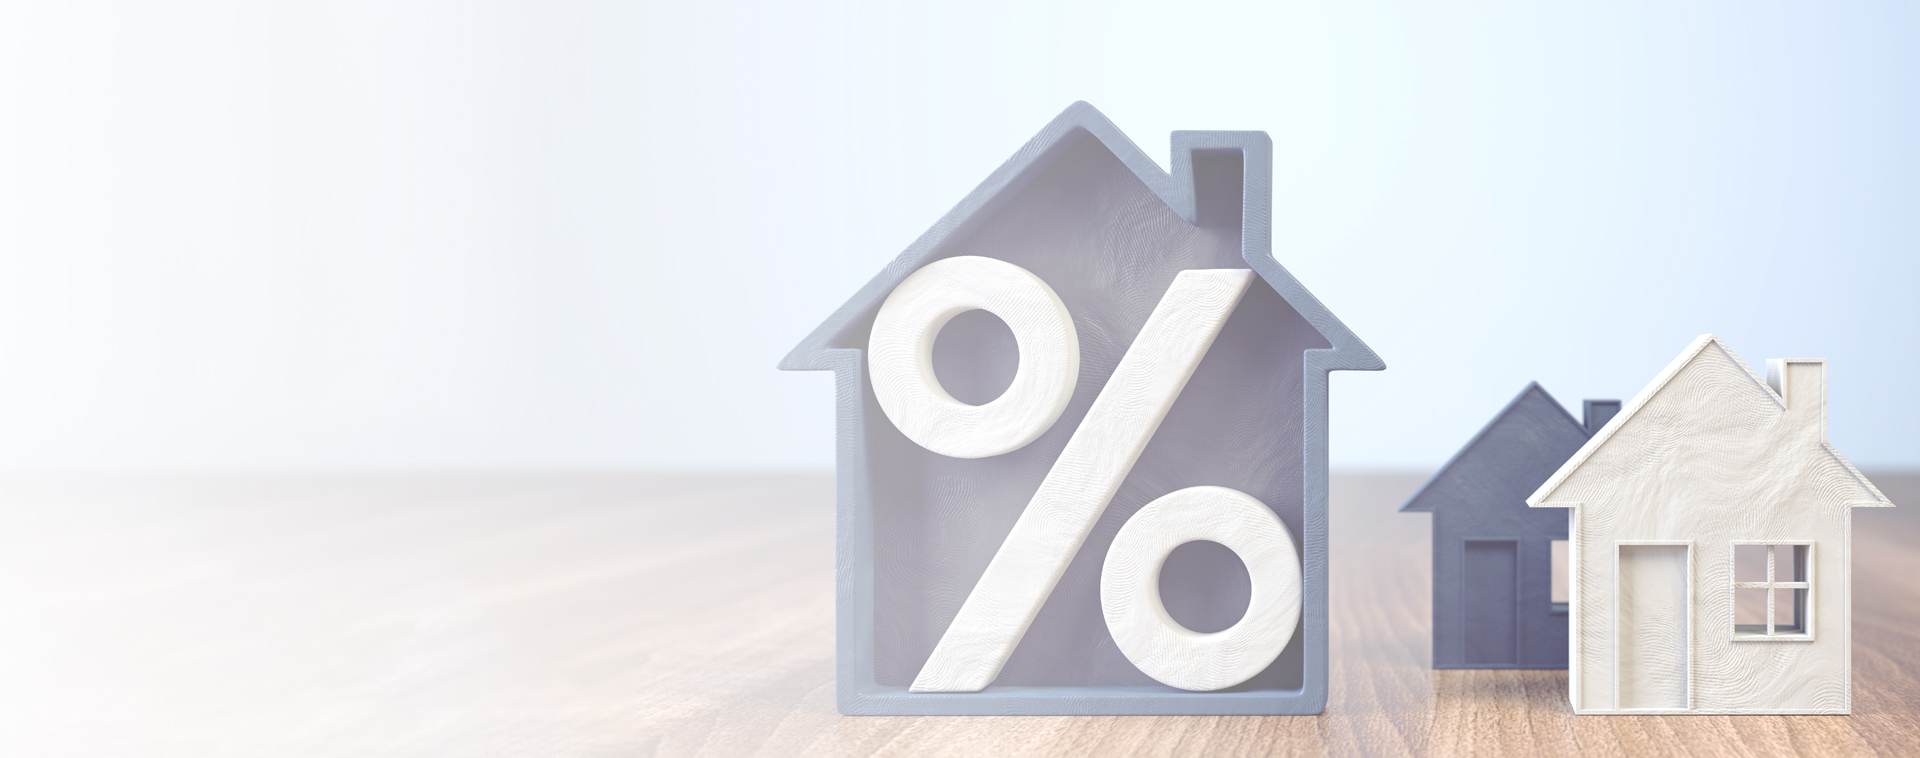 image showing 3d illustration of mortgage interest rates